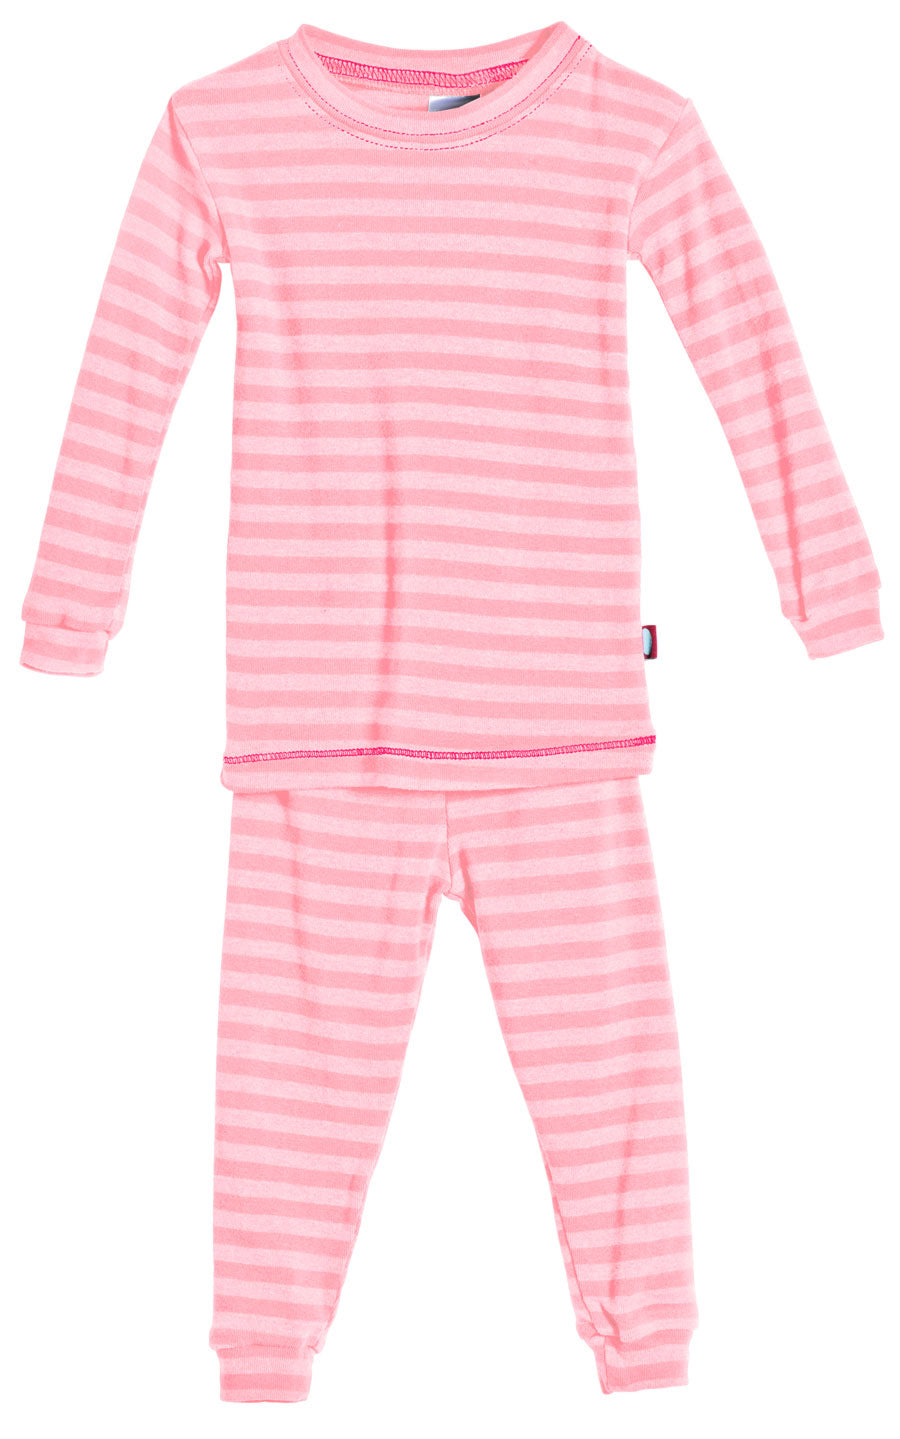 Boys and Girls Striped Matching Pajamas